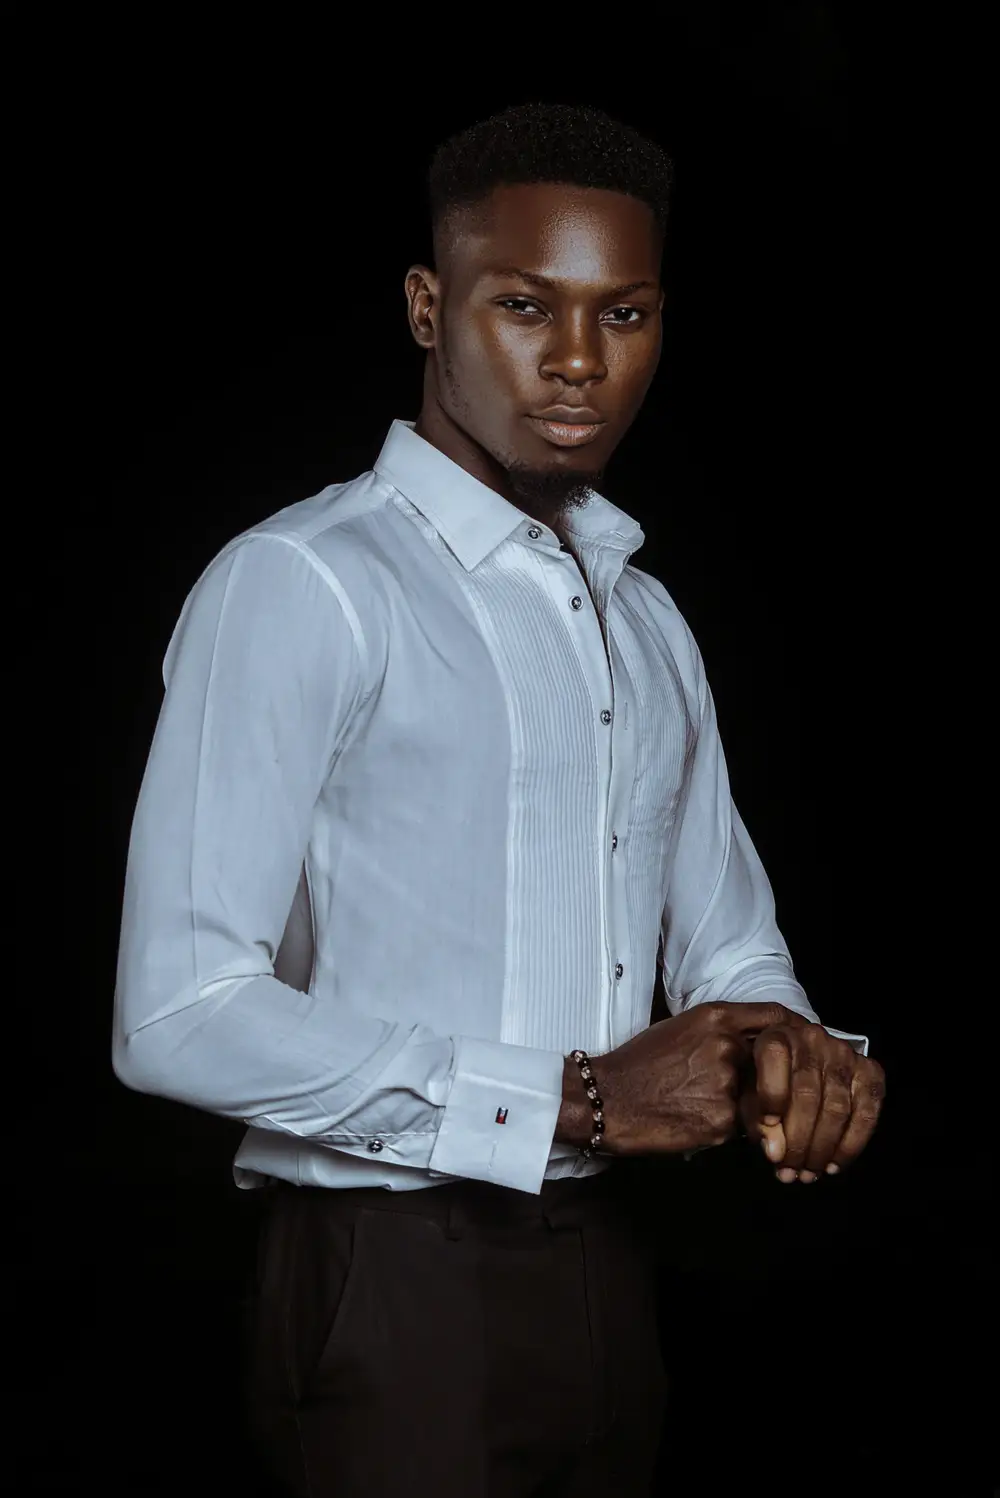 Cute black african nigerian model wearing expensive white shirt